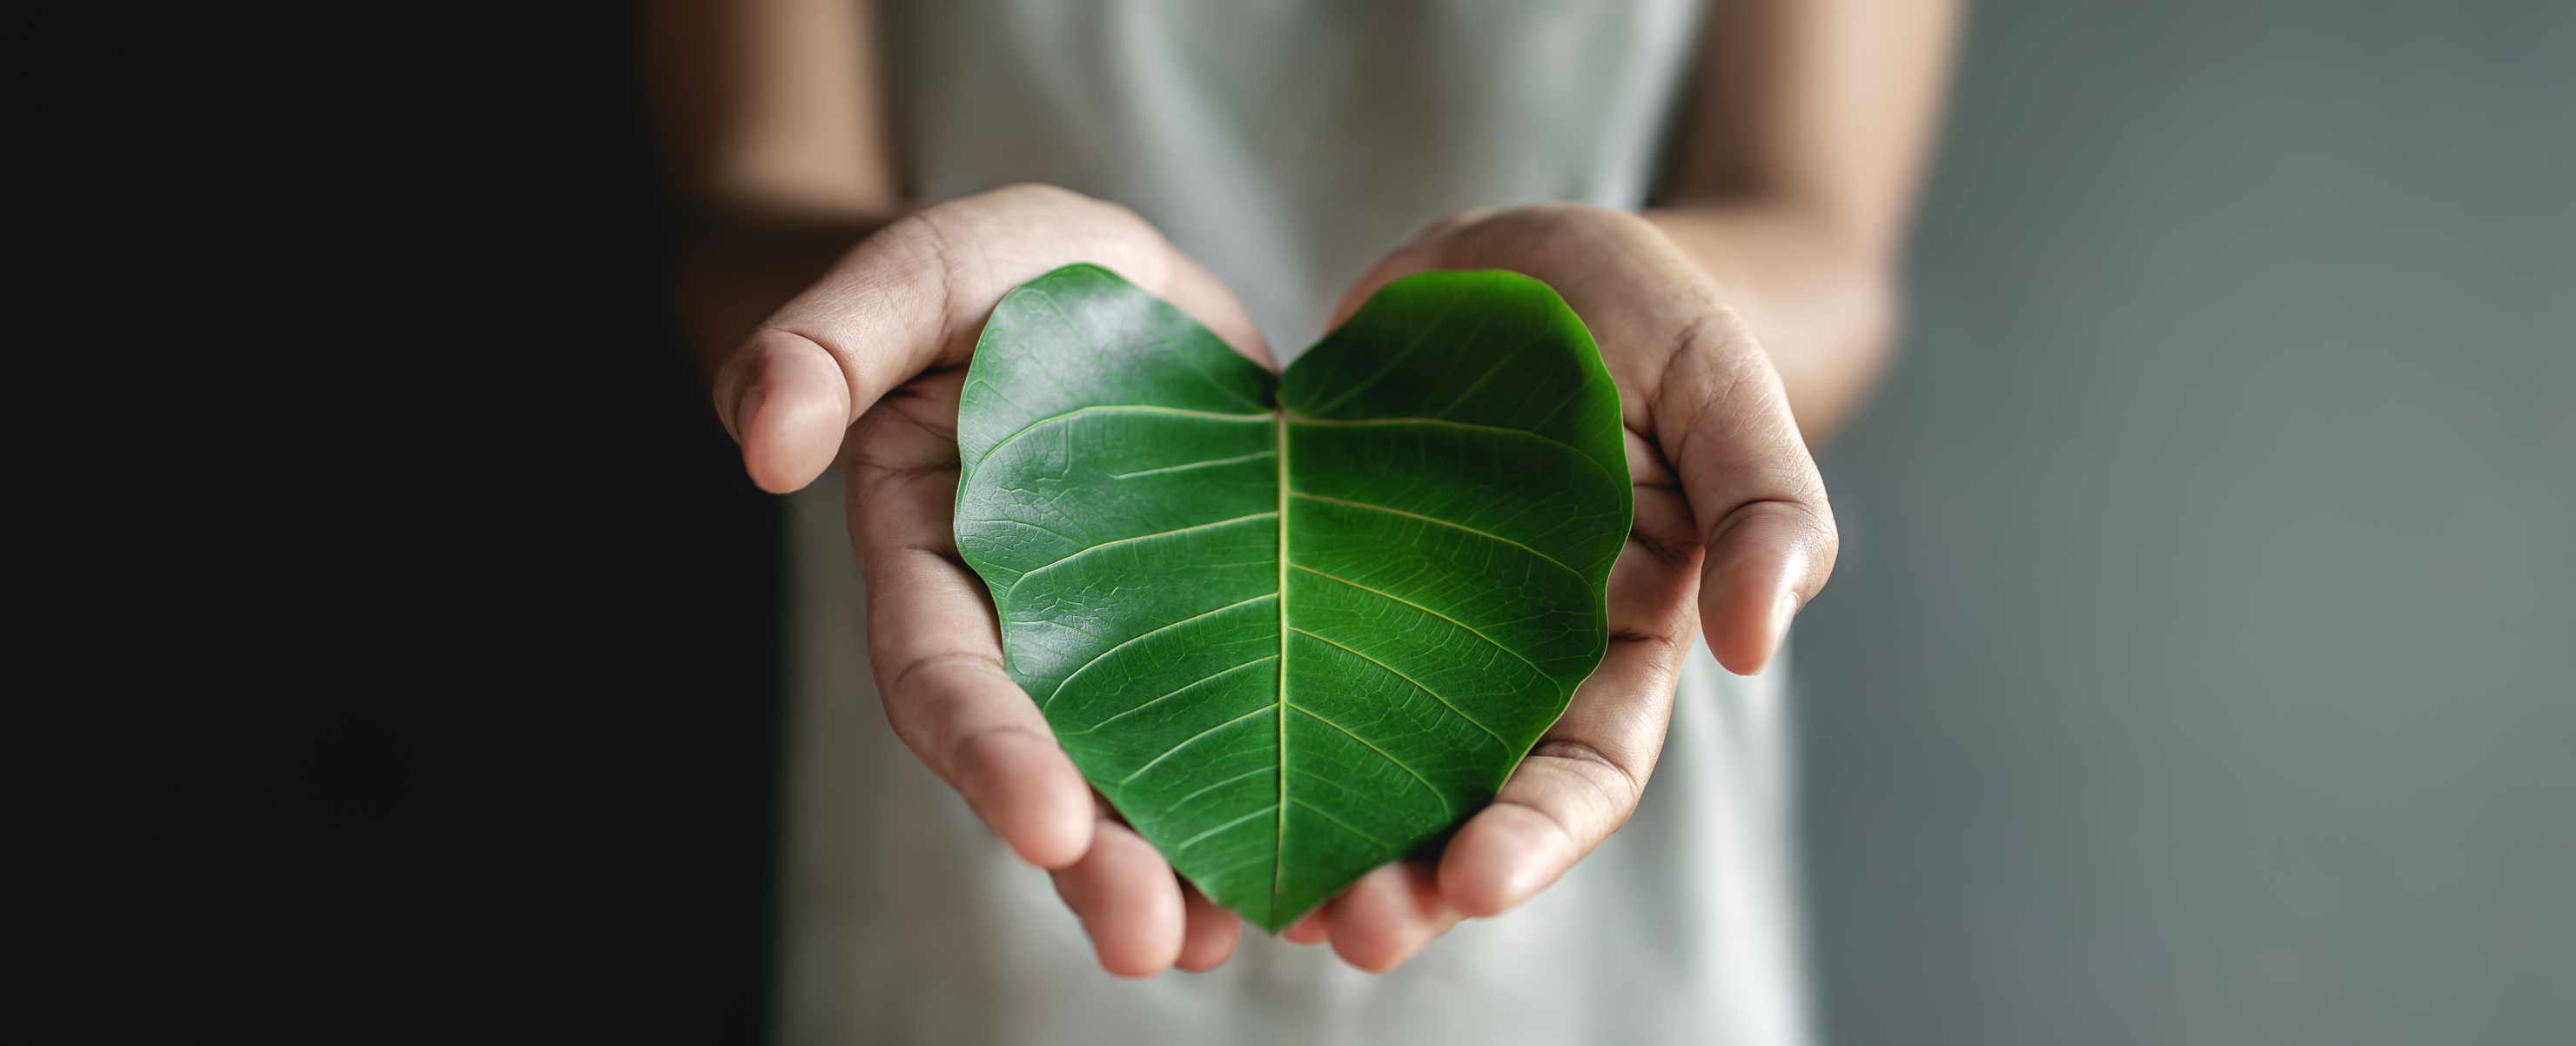 Hands Holding a Green Heart-Shape Leaf